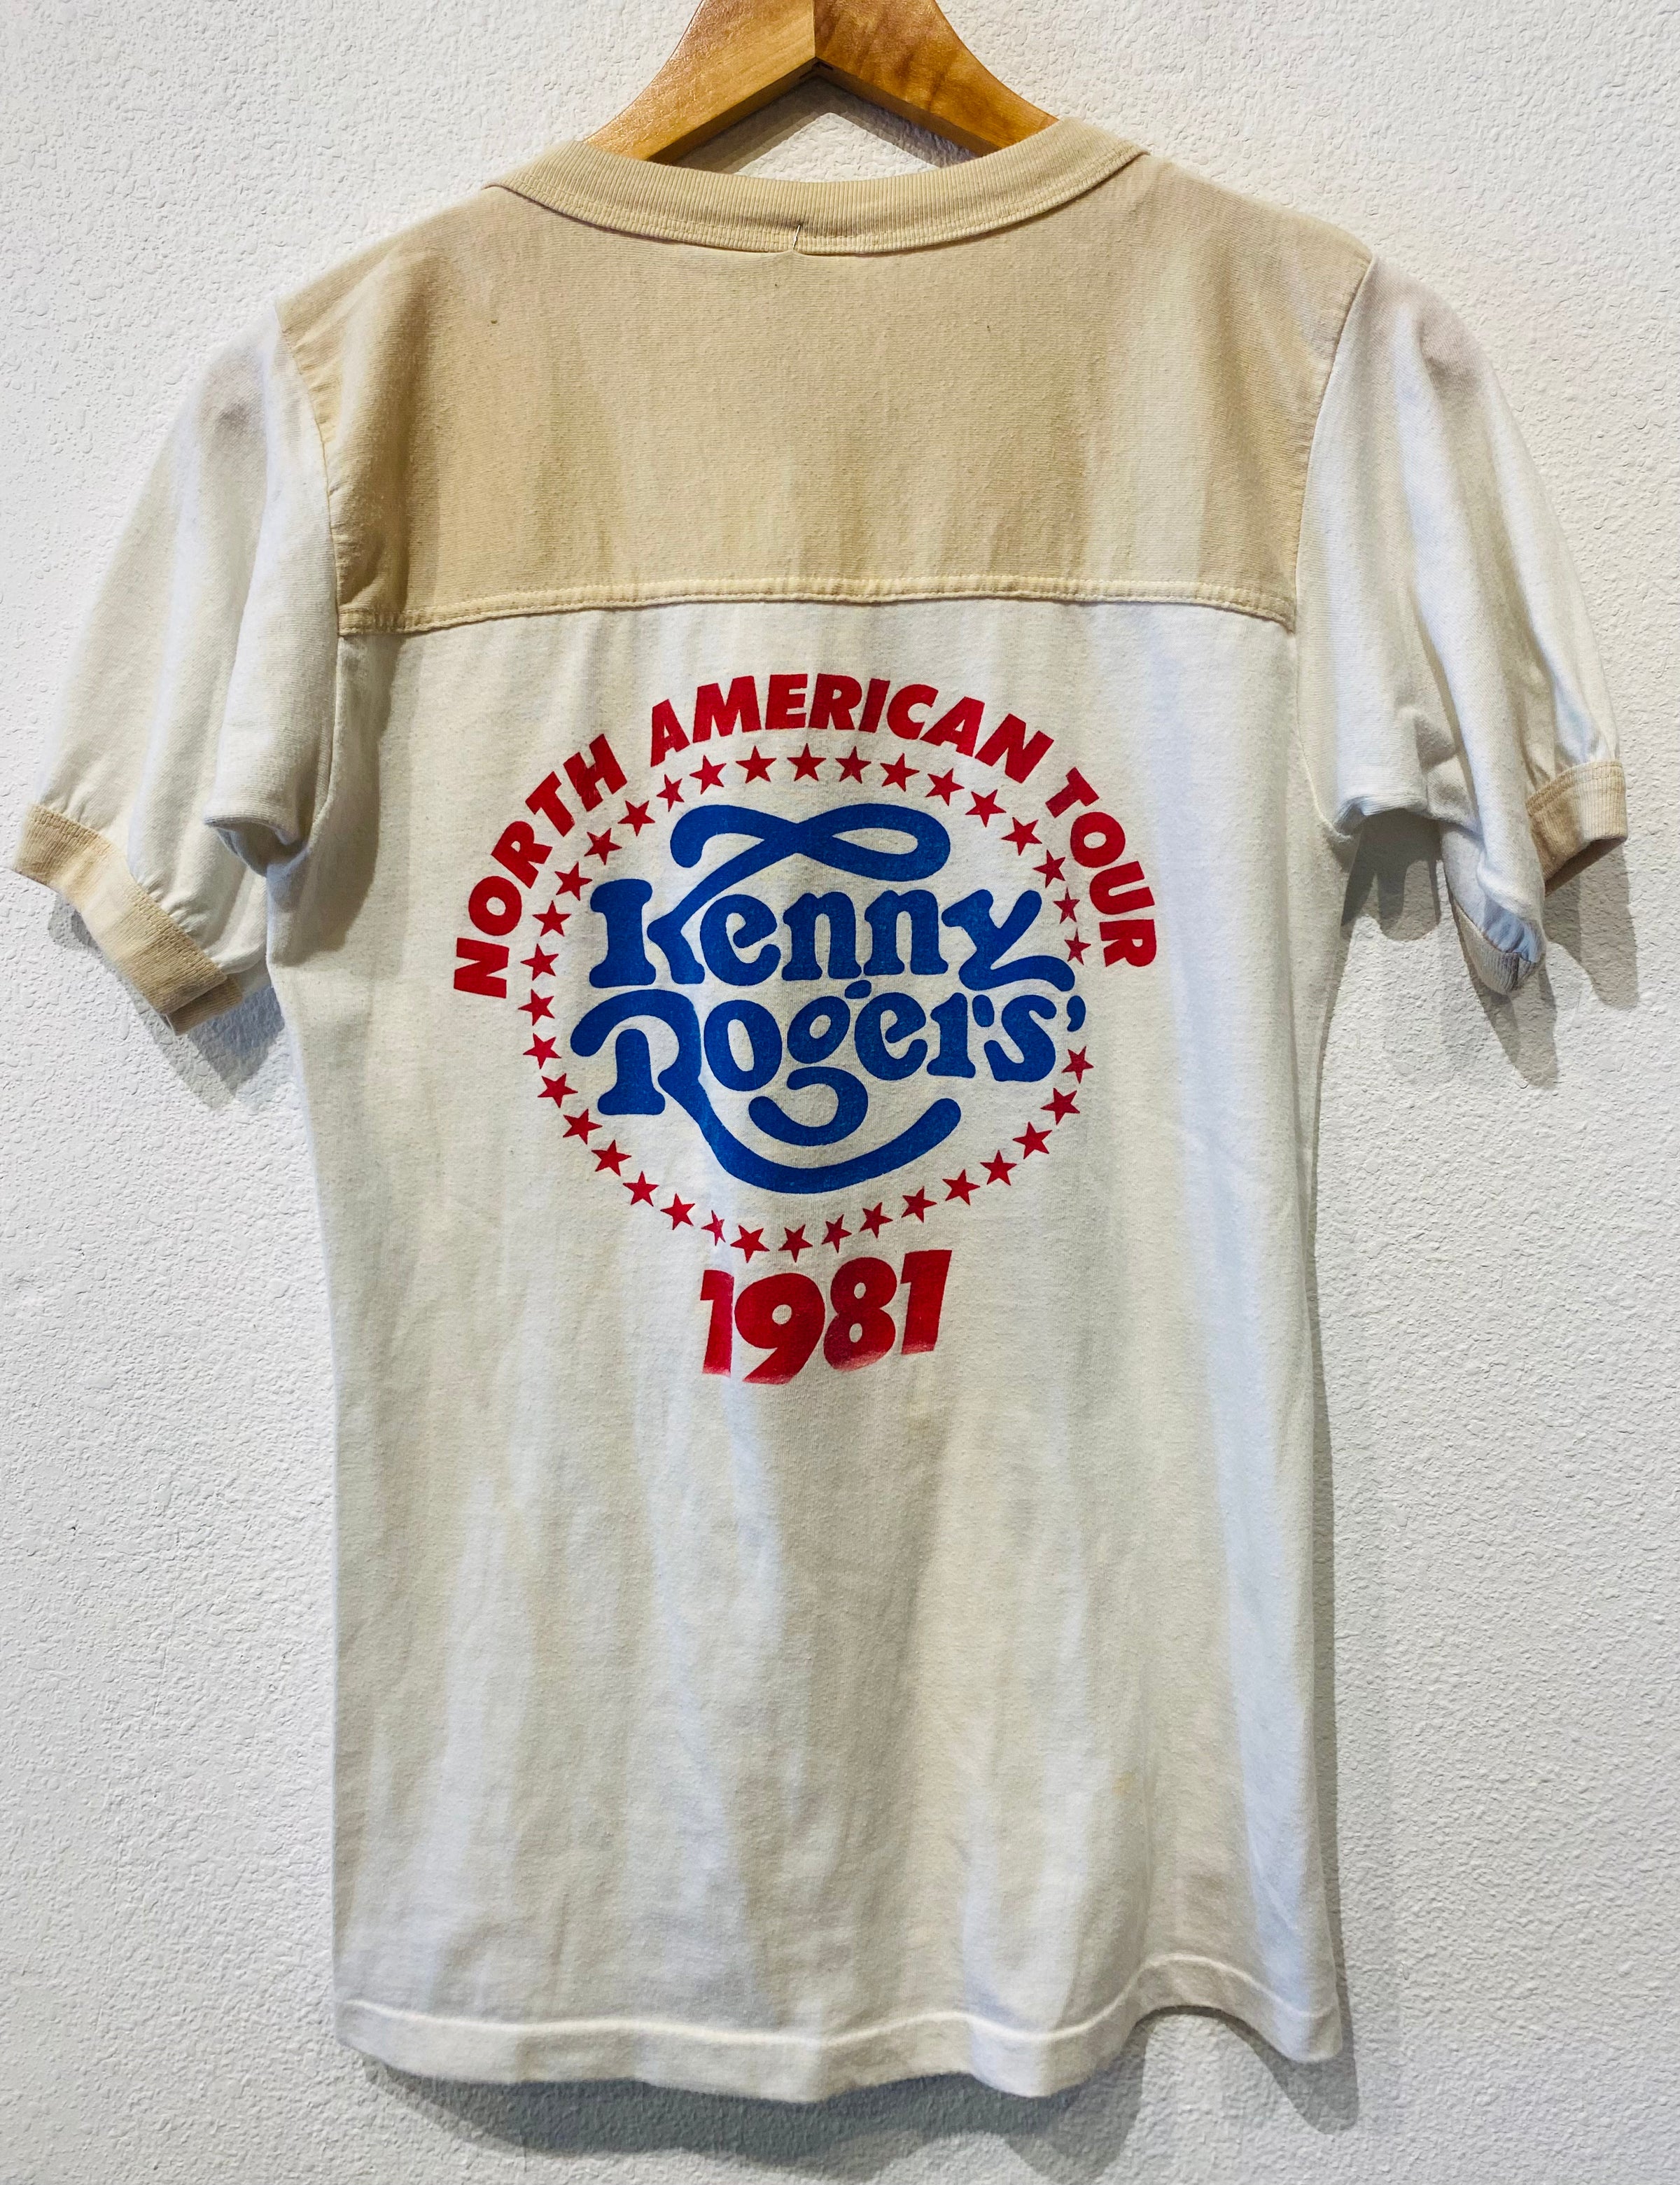 Kenny Rogers 1981 Vintage Tee